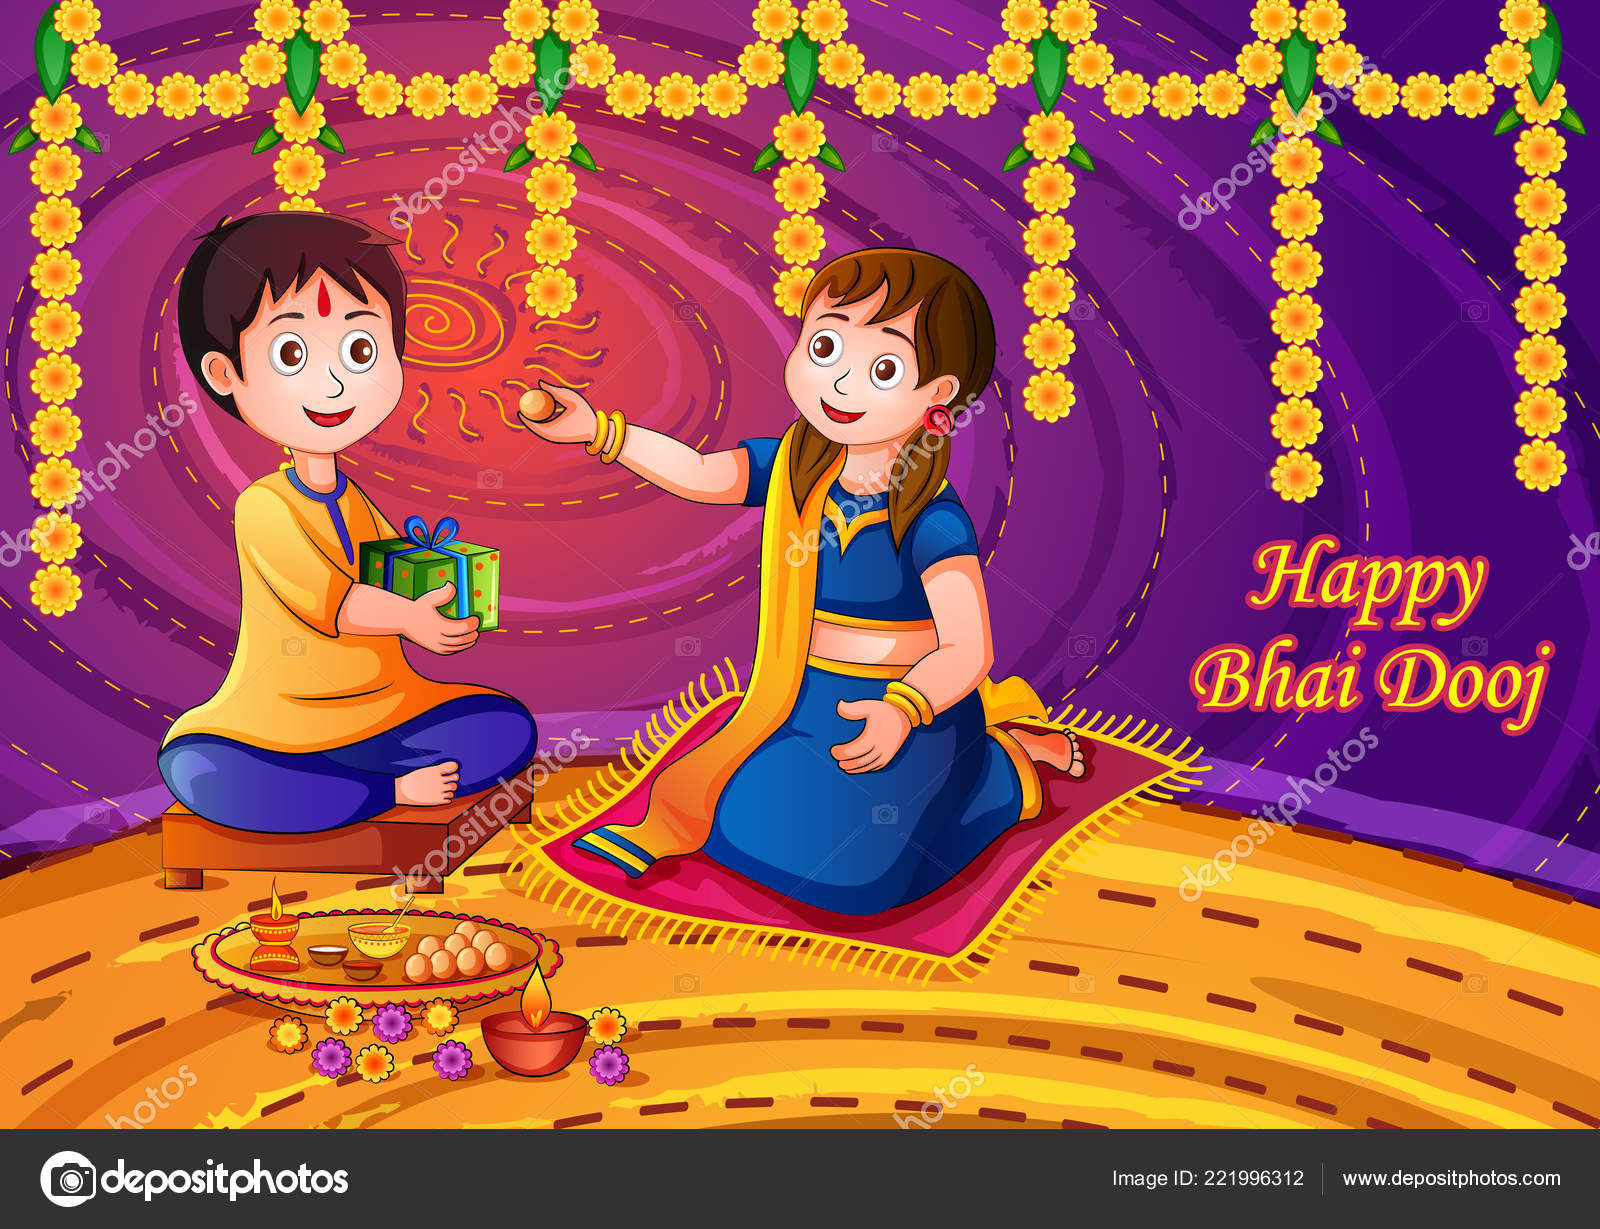 Illustration Of Hindu Festival Bhai Dooj Background Stock Illustration -  Download Image Now - iStock